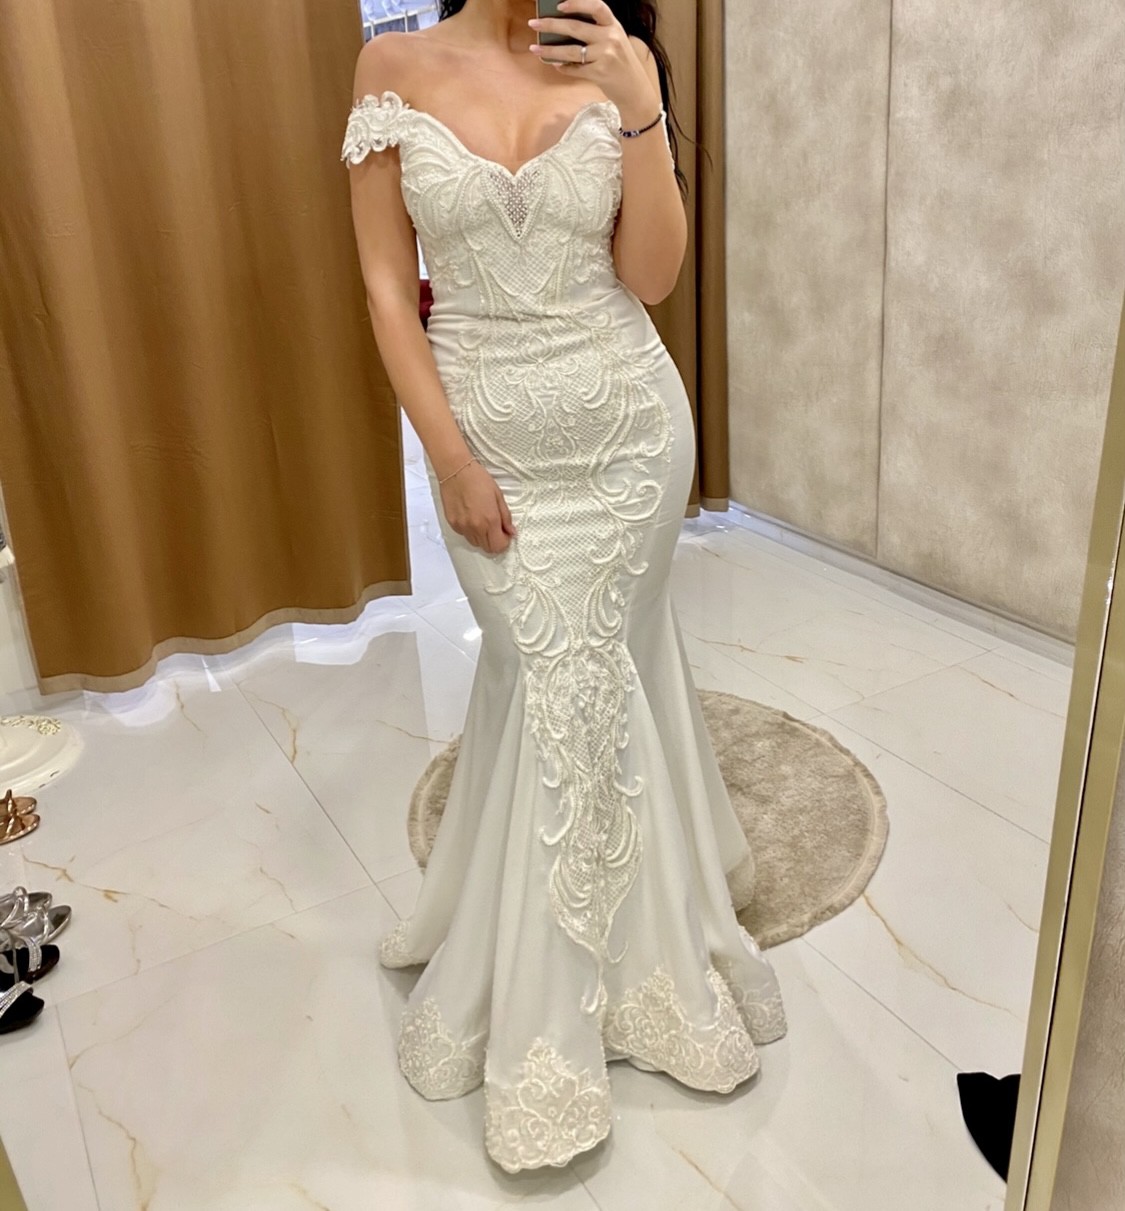 Vlora Kaltrina Custom Made New Wedding Dress Save 67% - Stillwhite